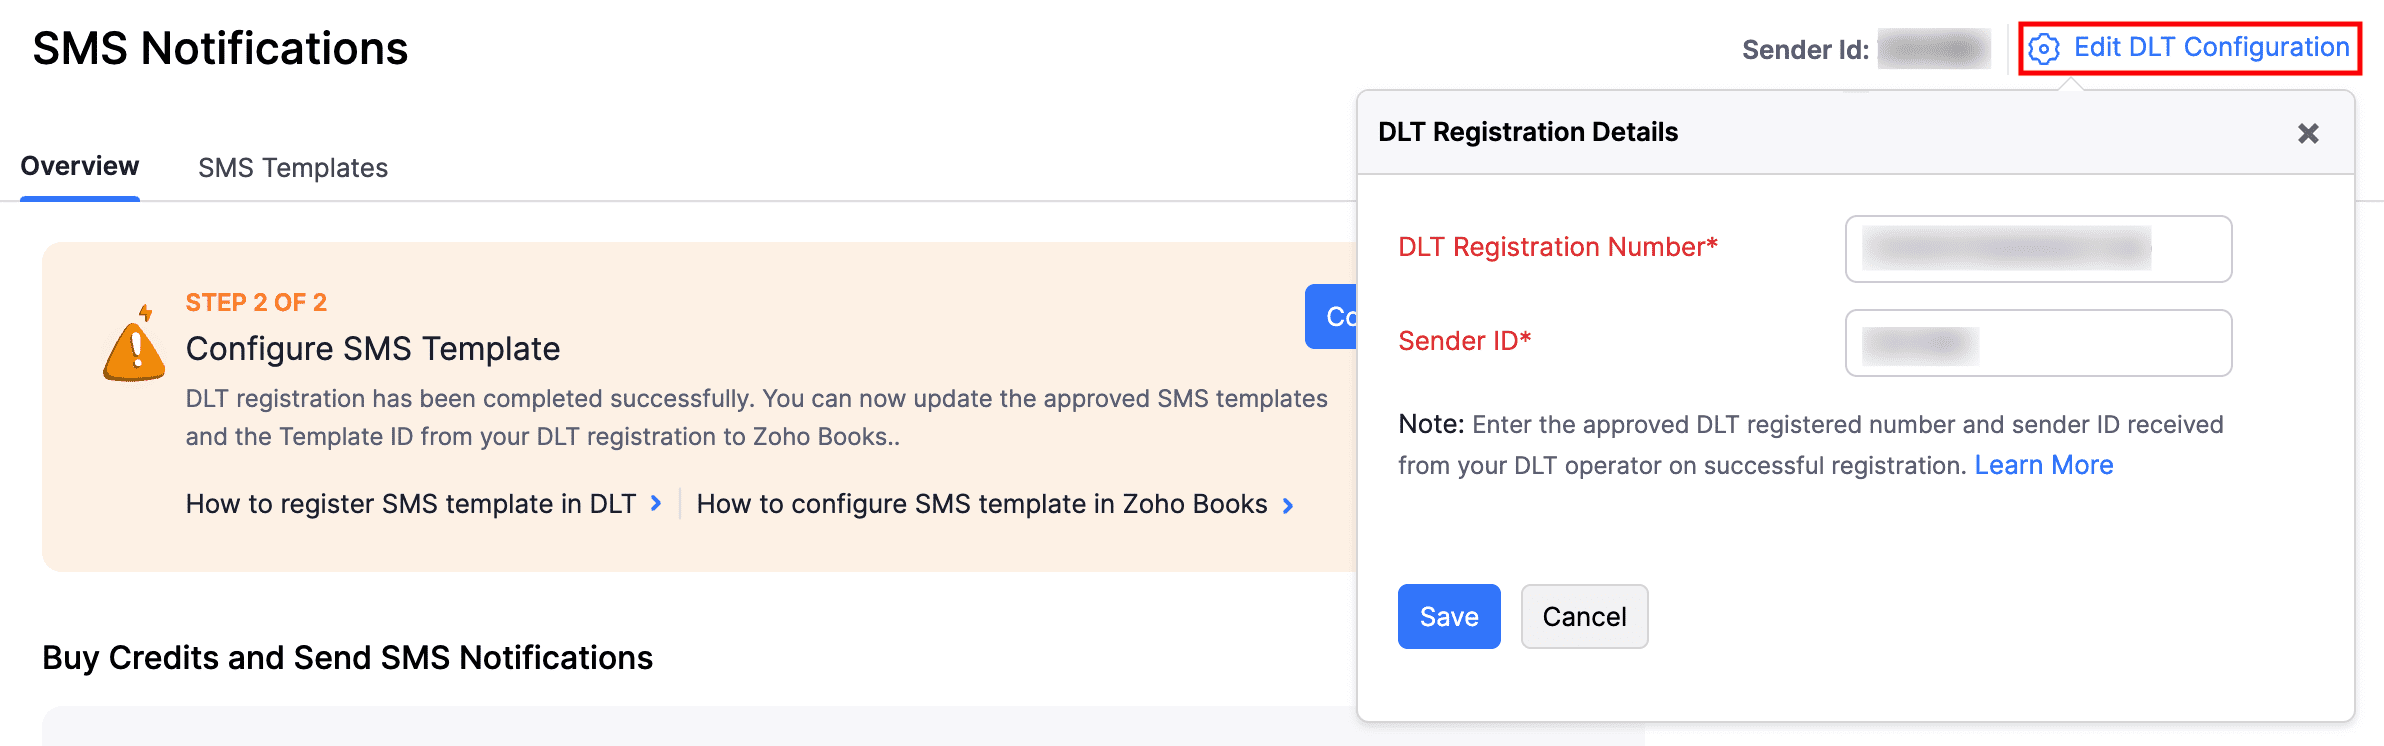 Configure DLT Registration